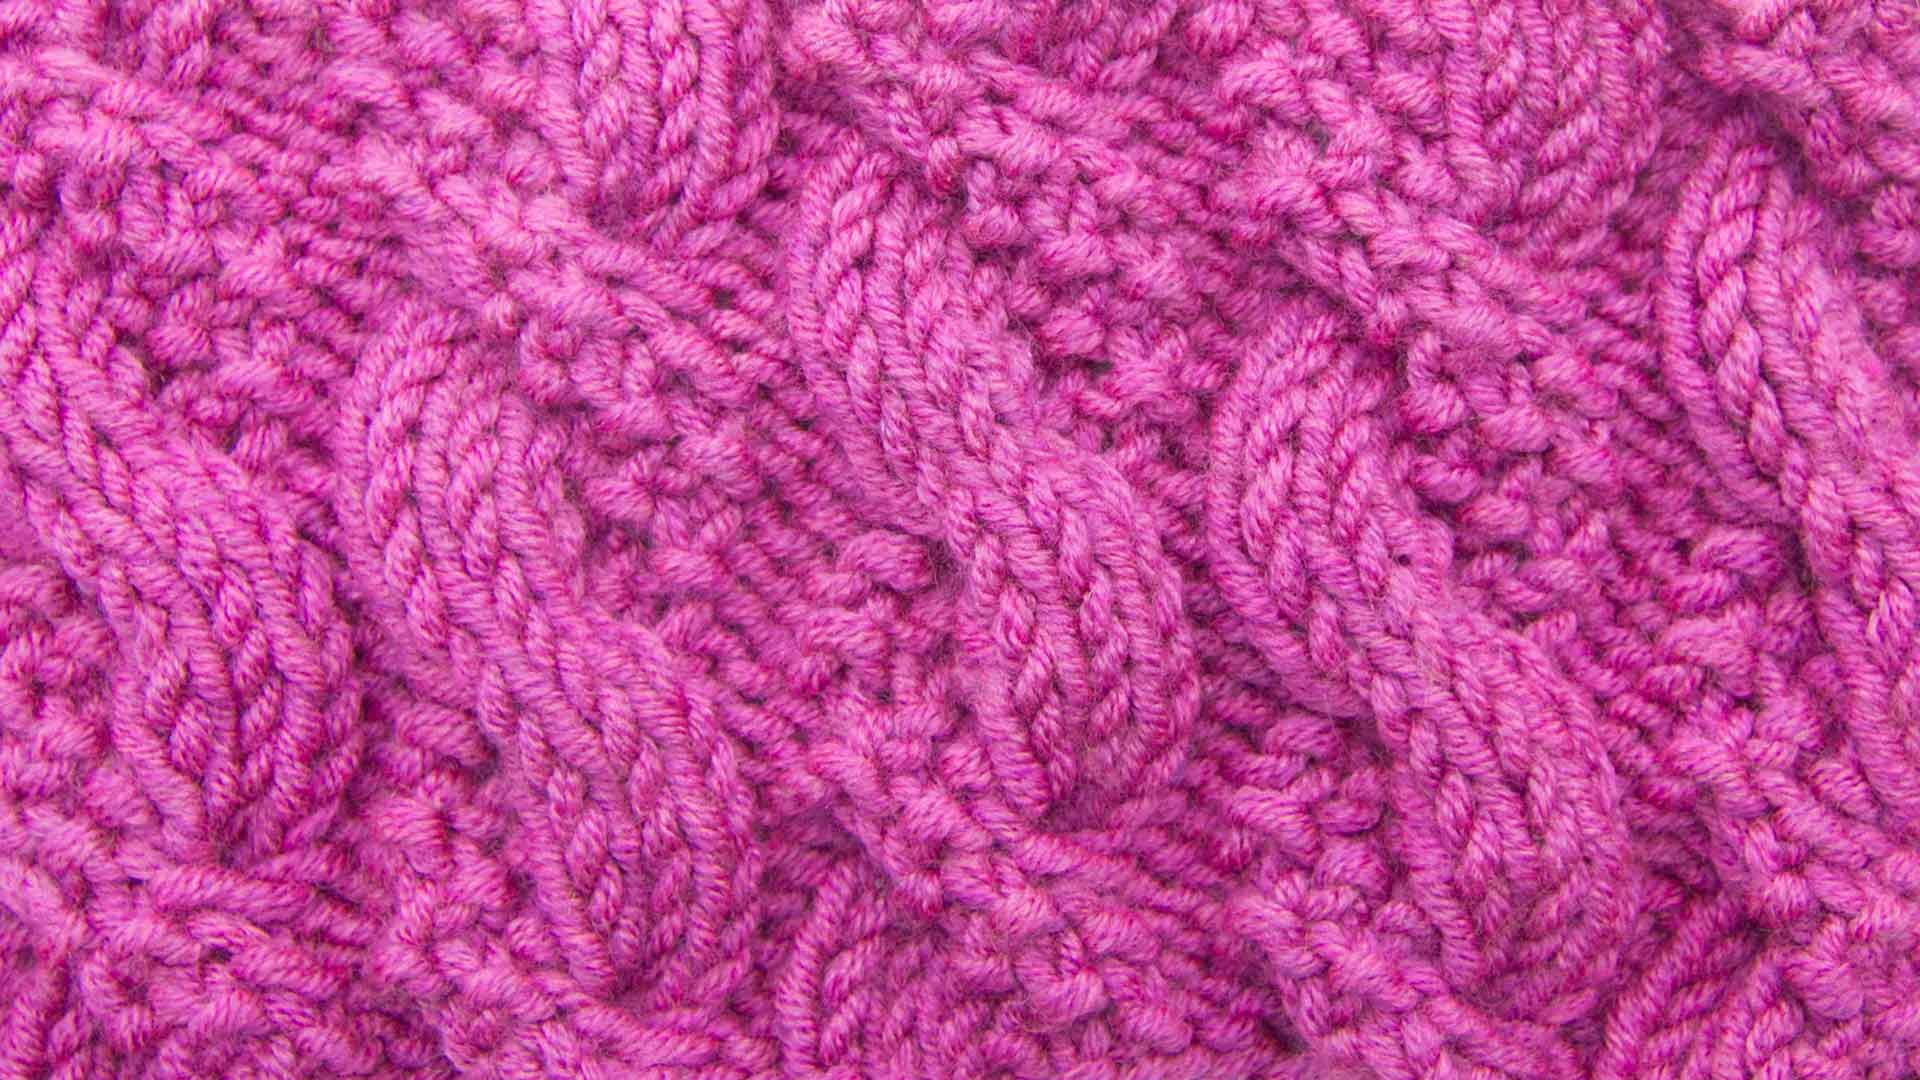 knitting stitches the textured cable stitch :: knitting stitch #526 VTFNFPW